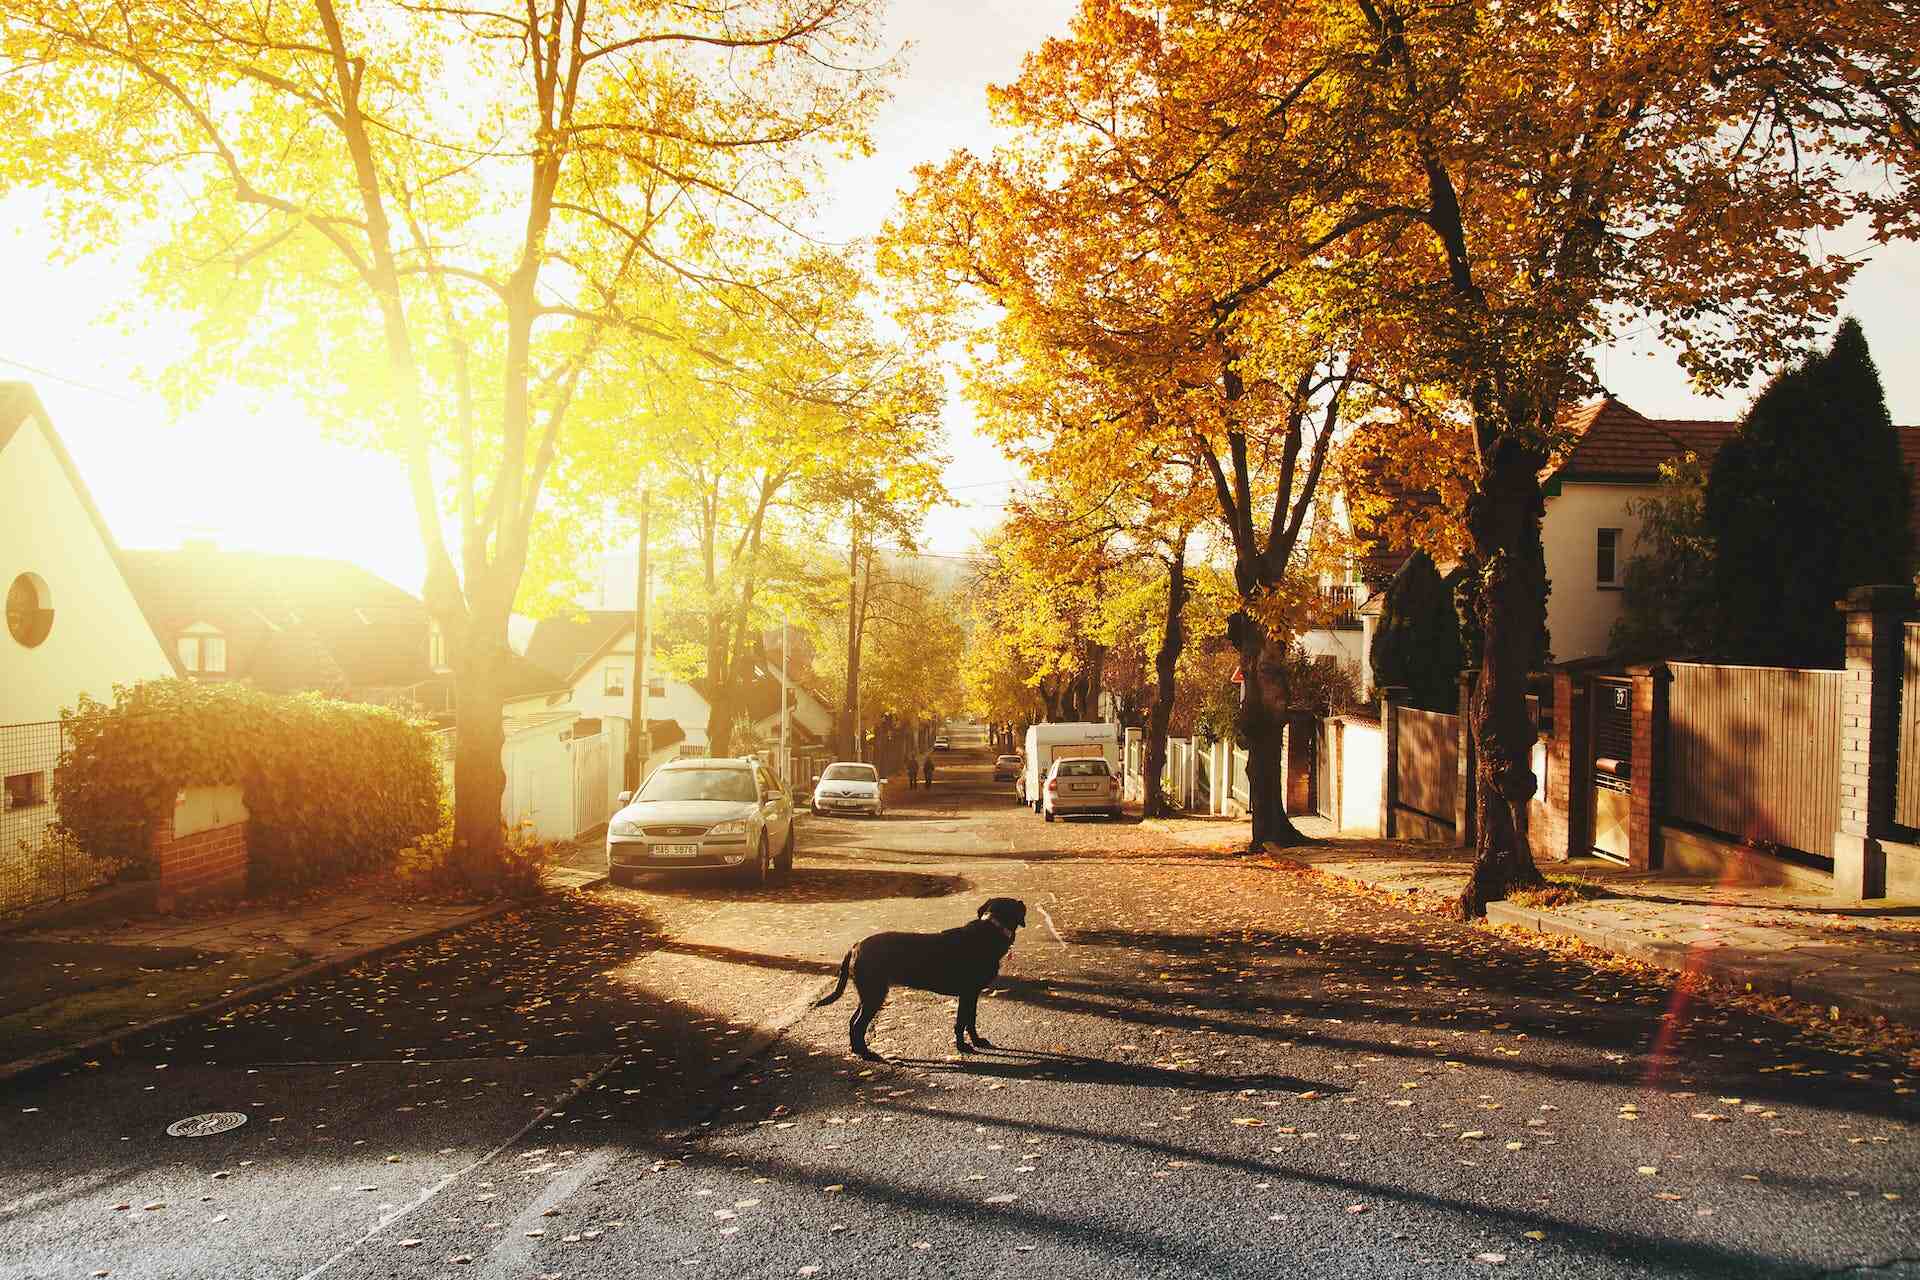 A dog wandering around a sunny neighborhood